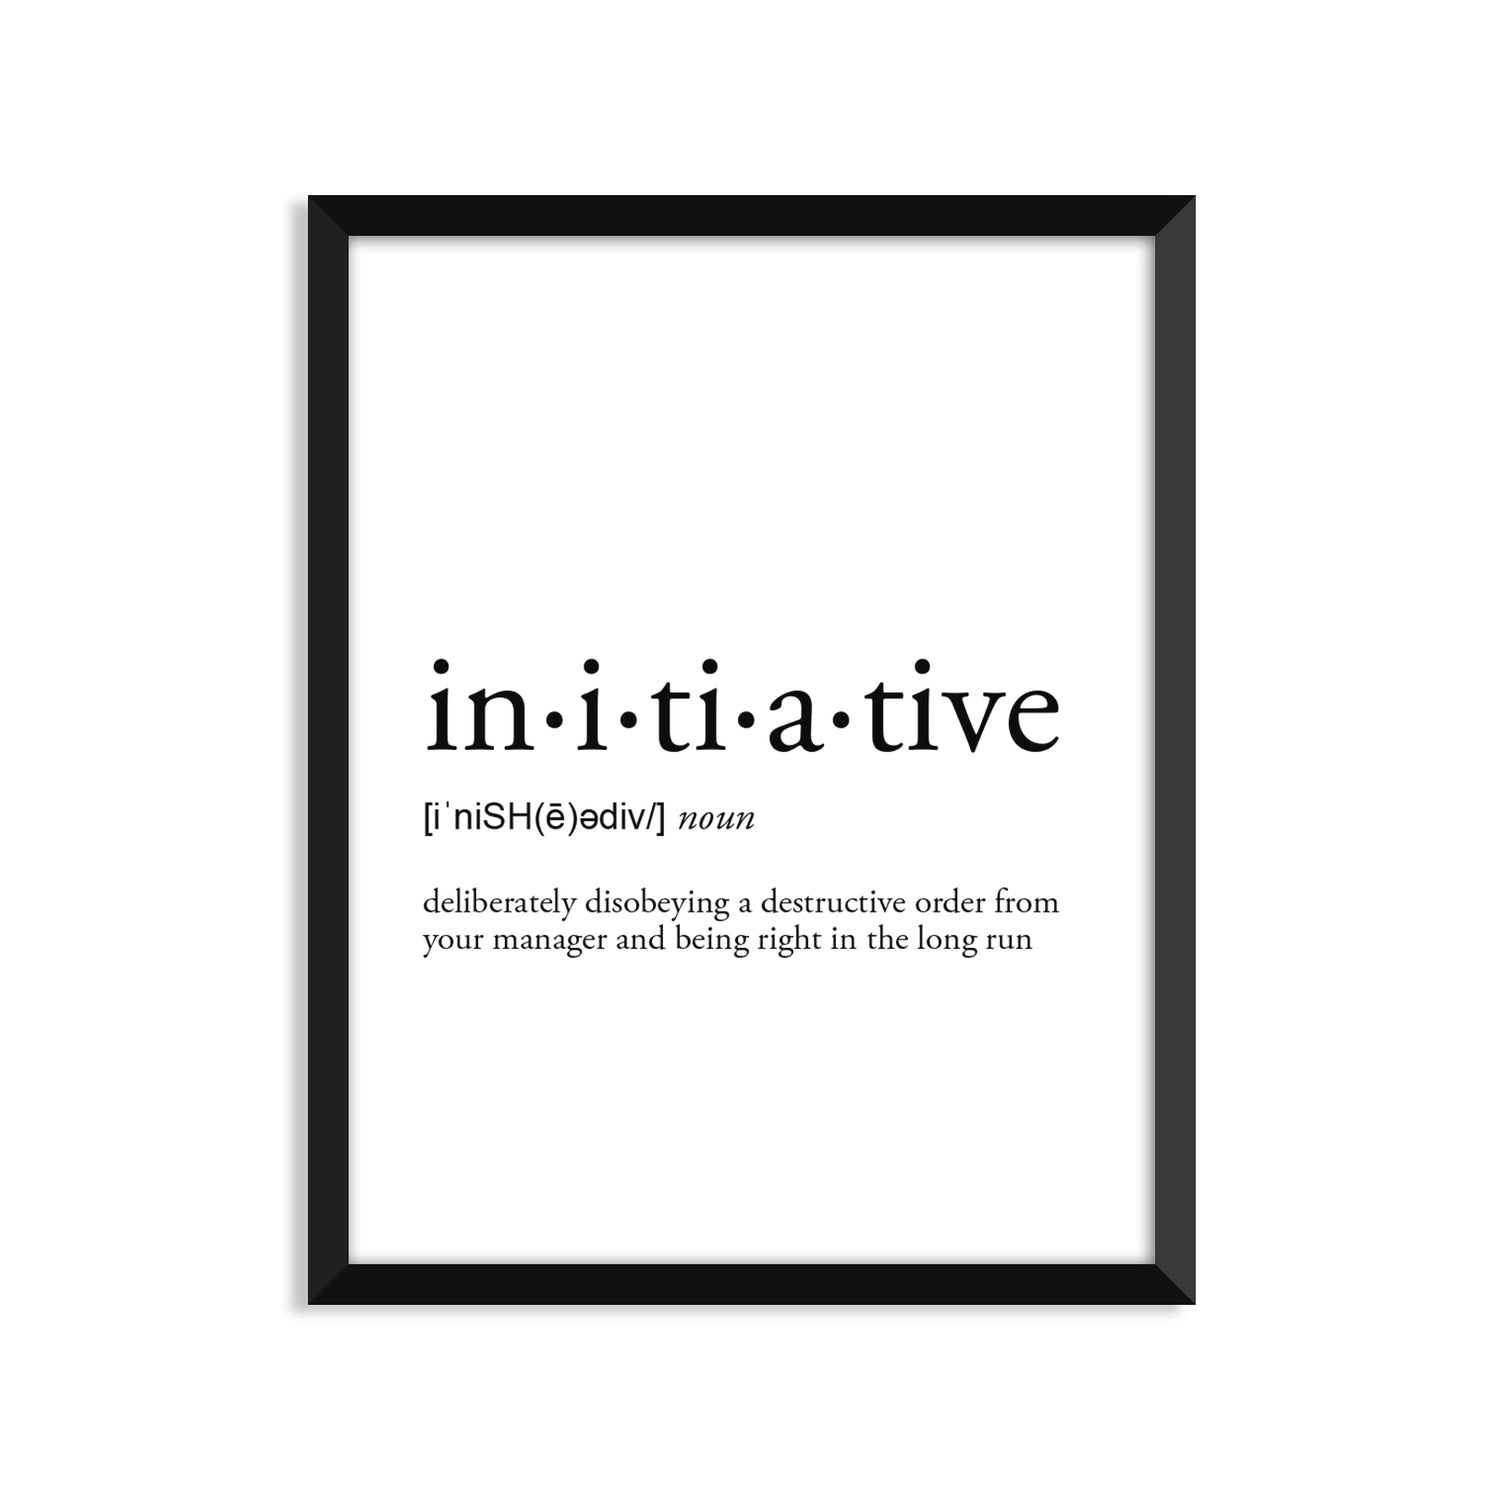 Initiative Definition - Unframed Art Print Or Greeting Card